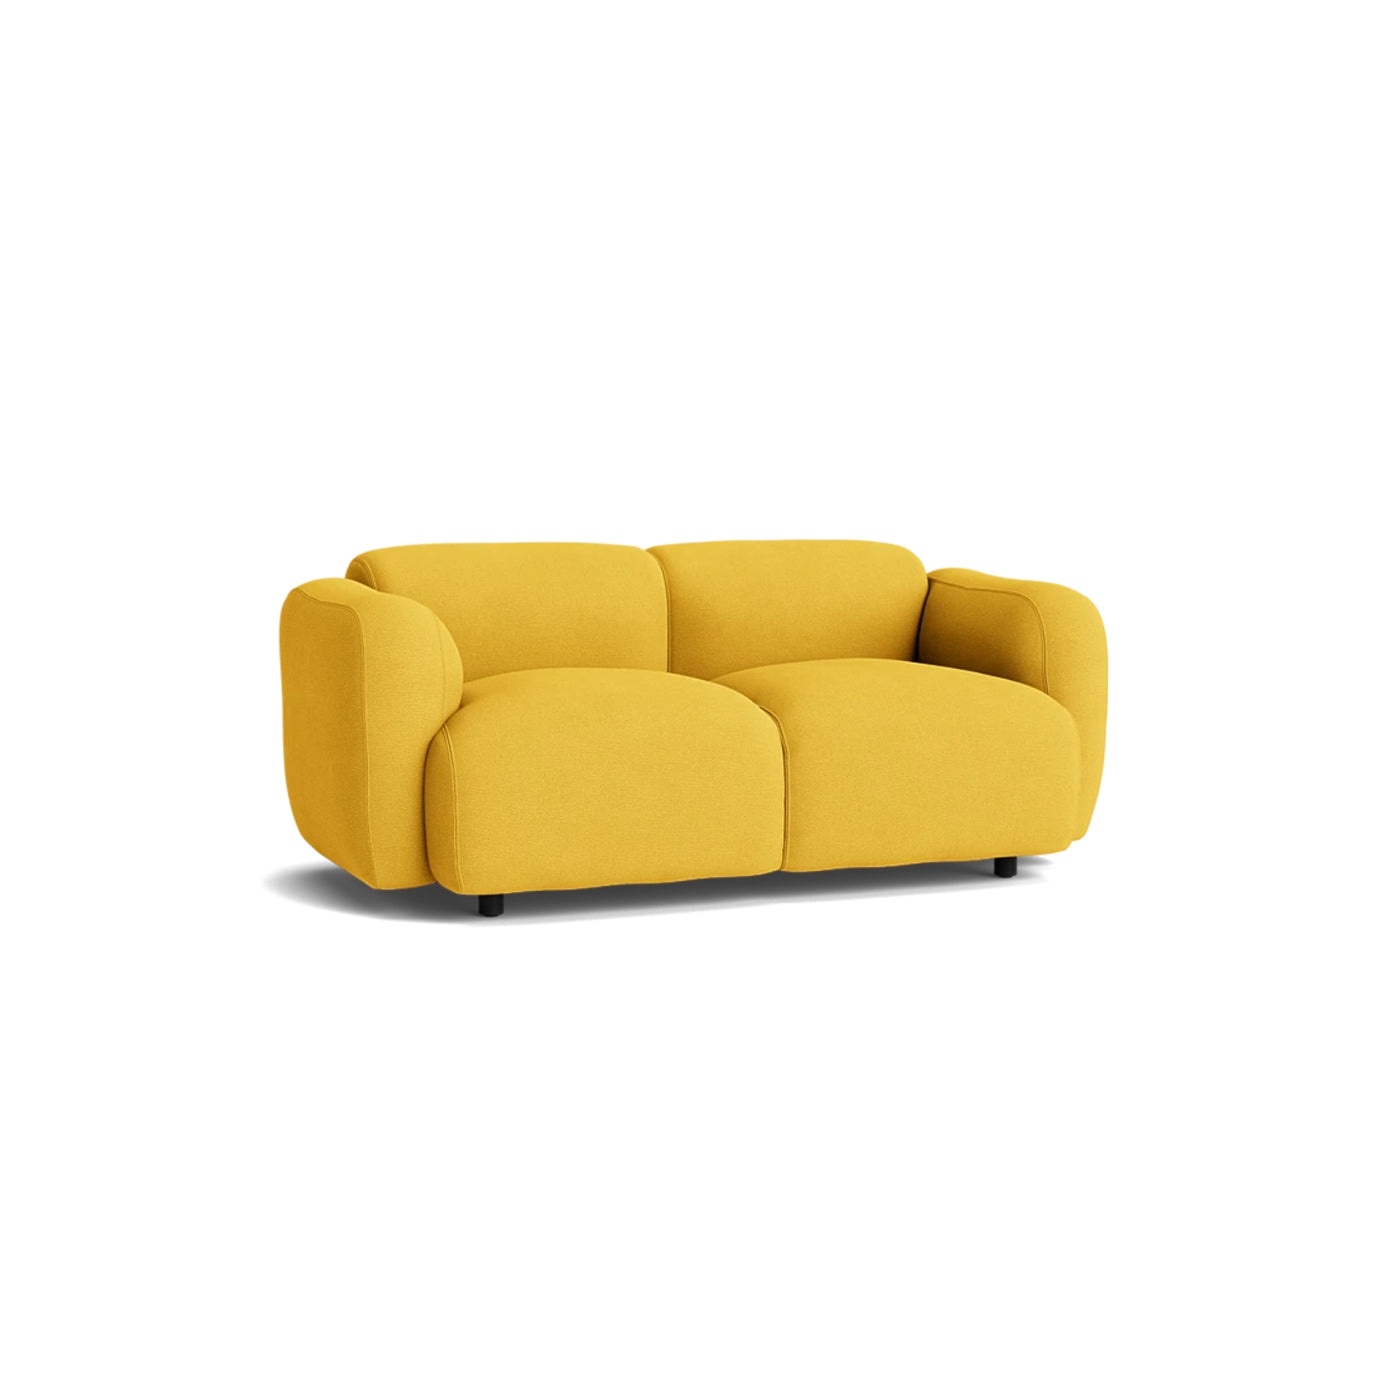 Normann Copenhagen Swell 2 Seater Sofa at someday designs. #colour_hallingdal-457